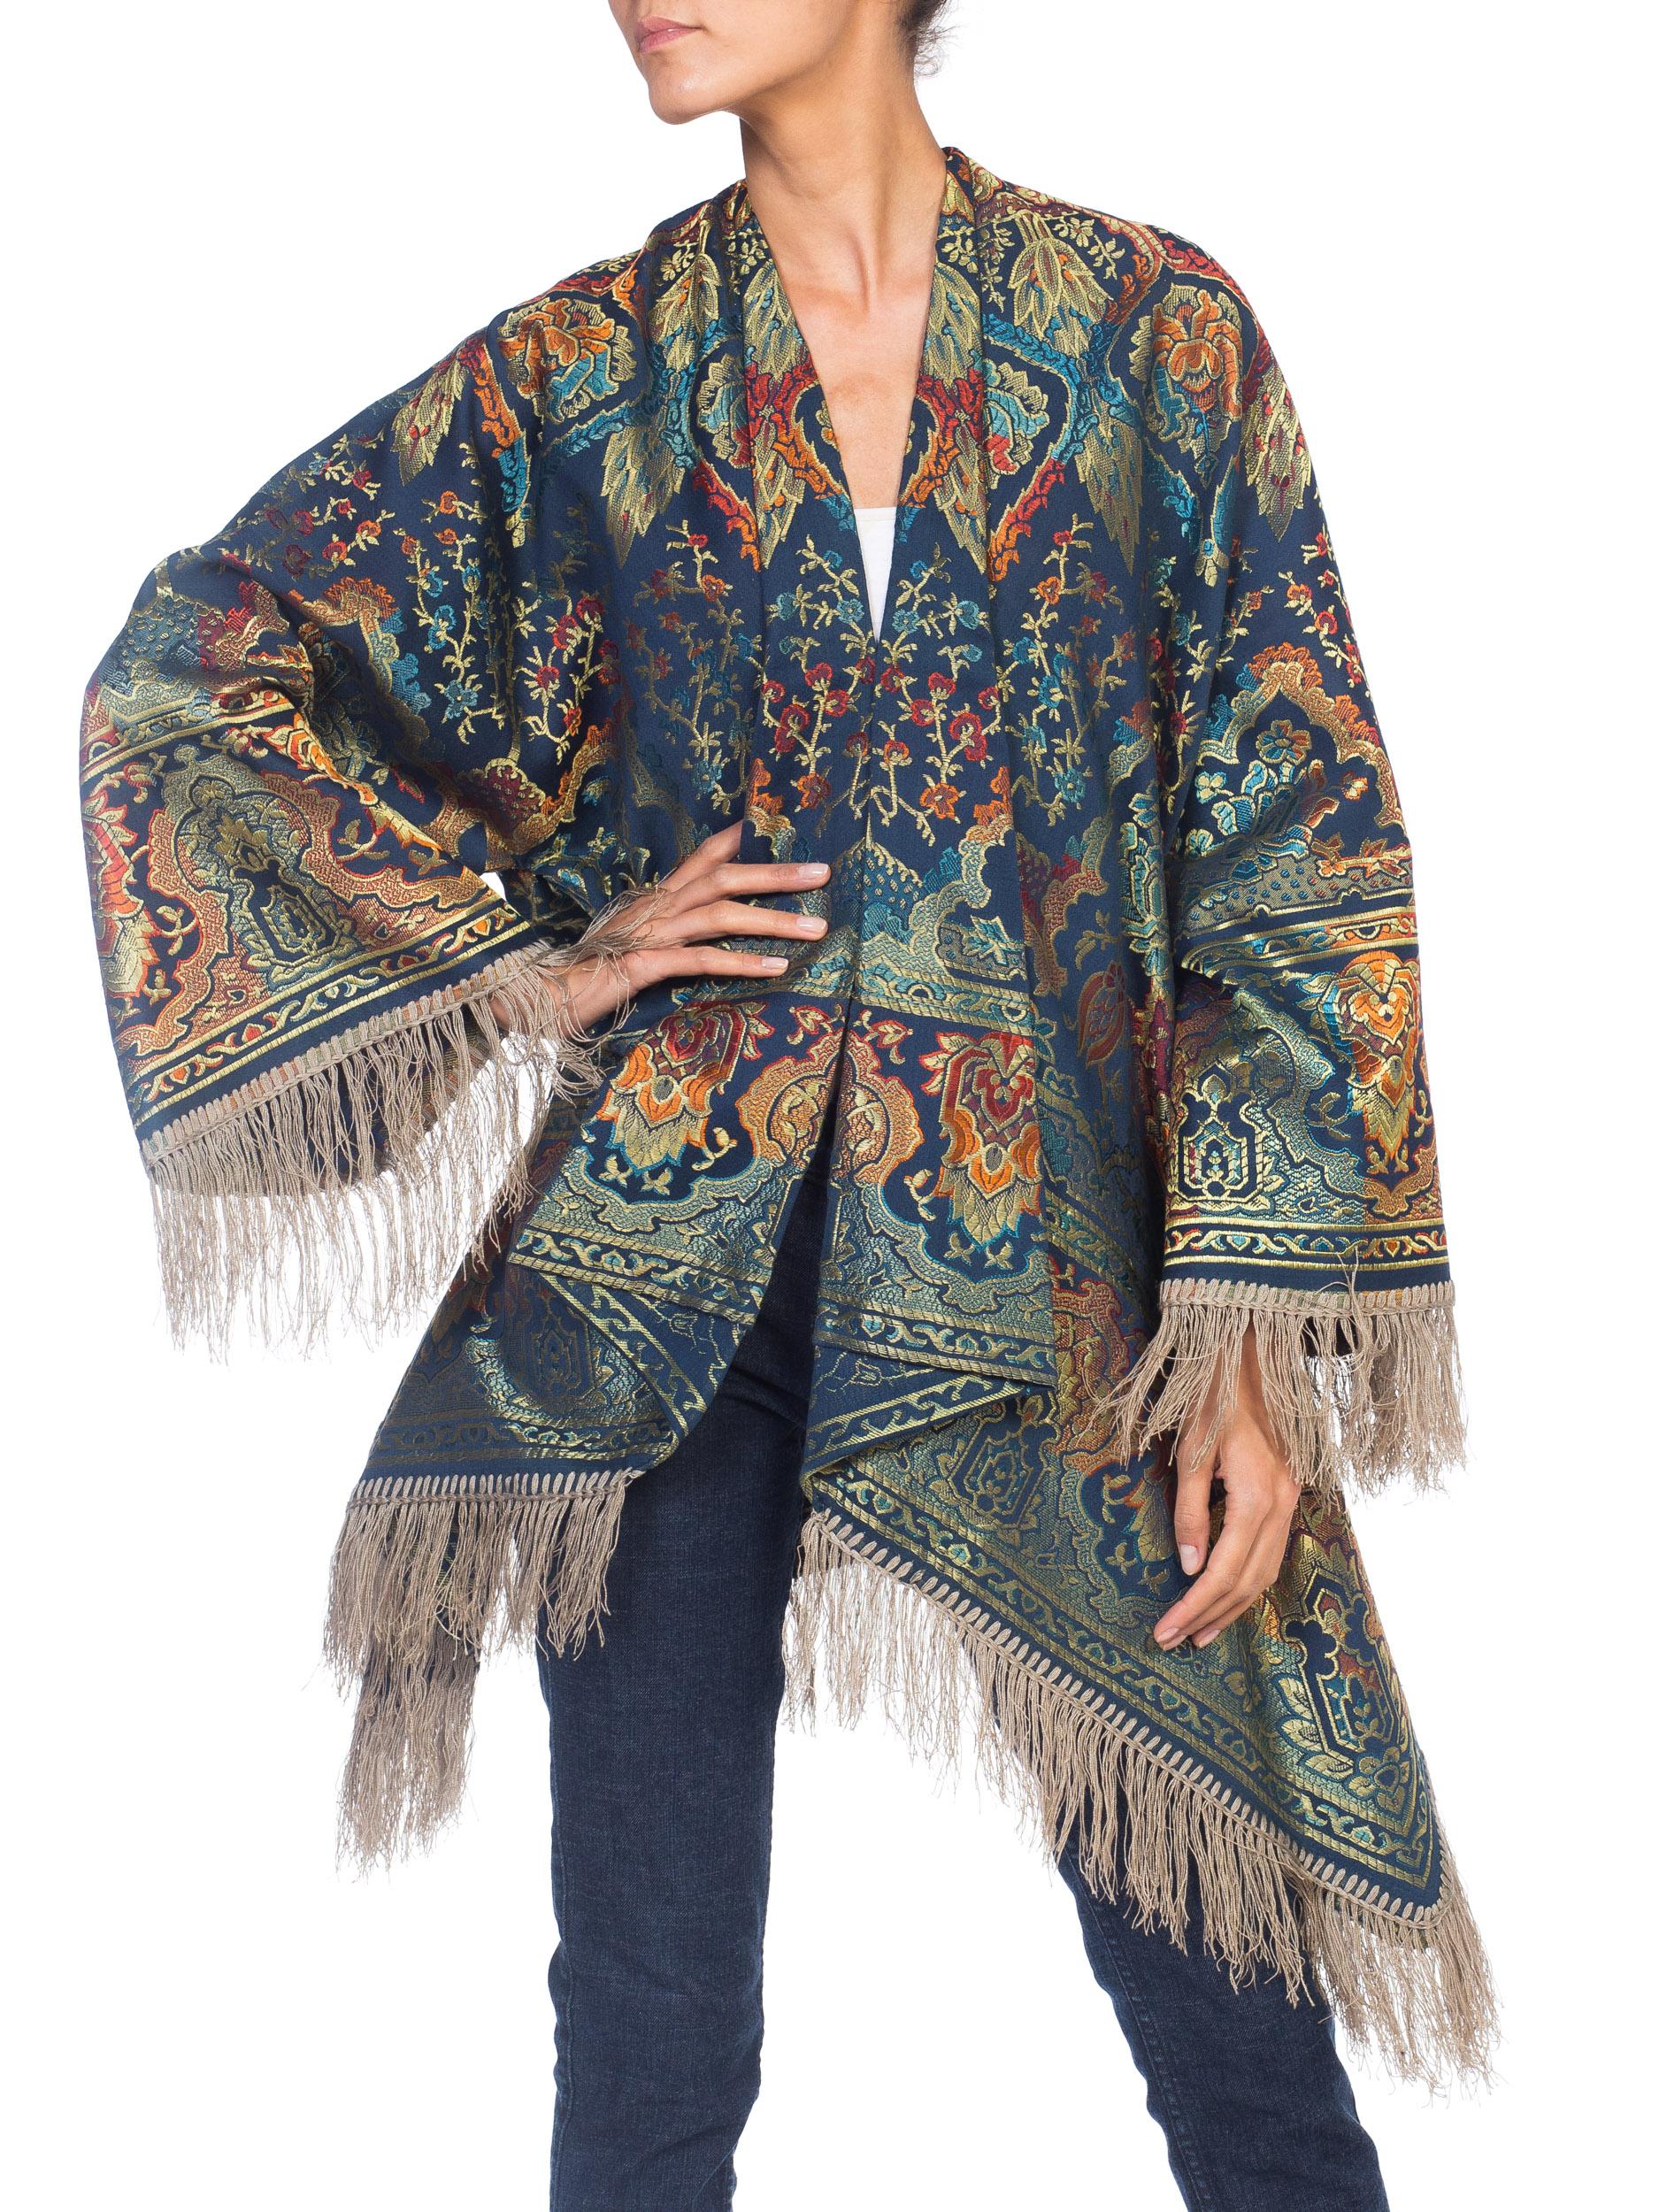 Morphew Swing Coat Kimono Jacket Made From 1940s Fabric 2